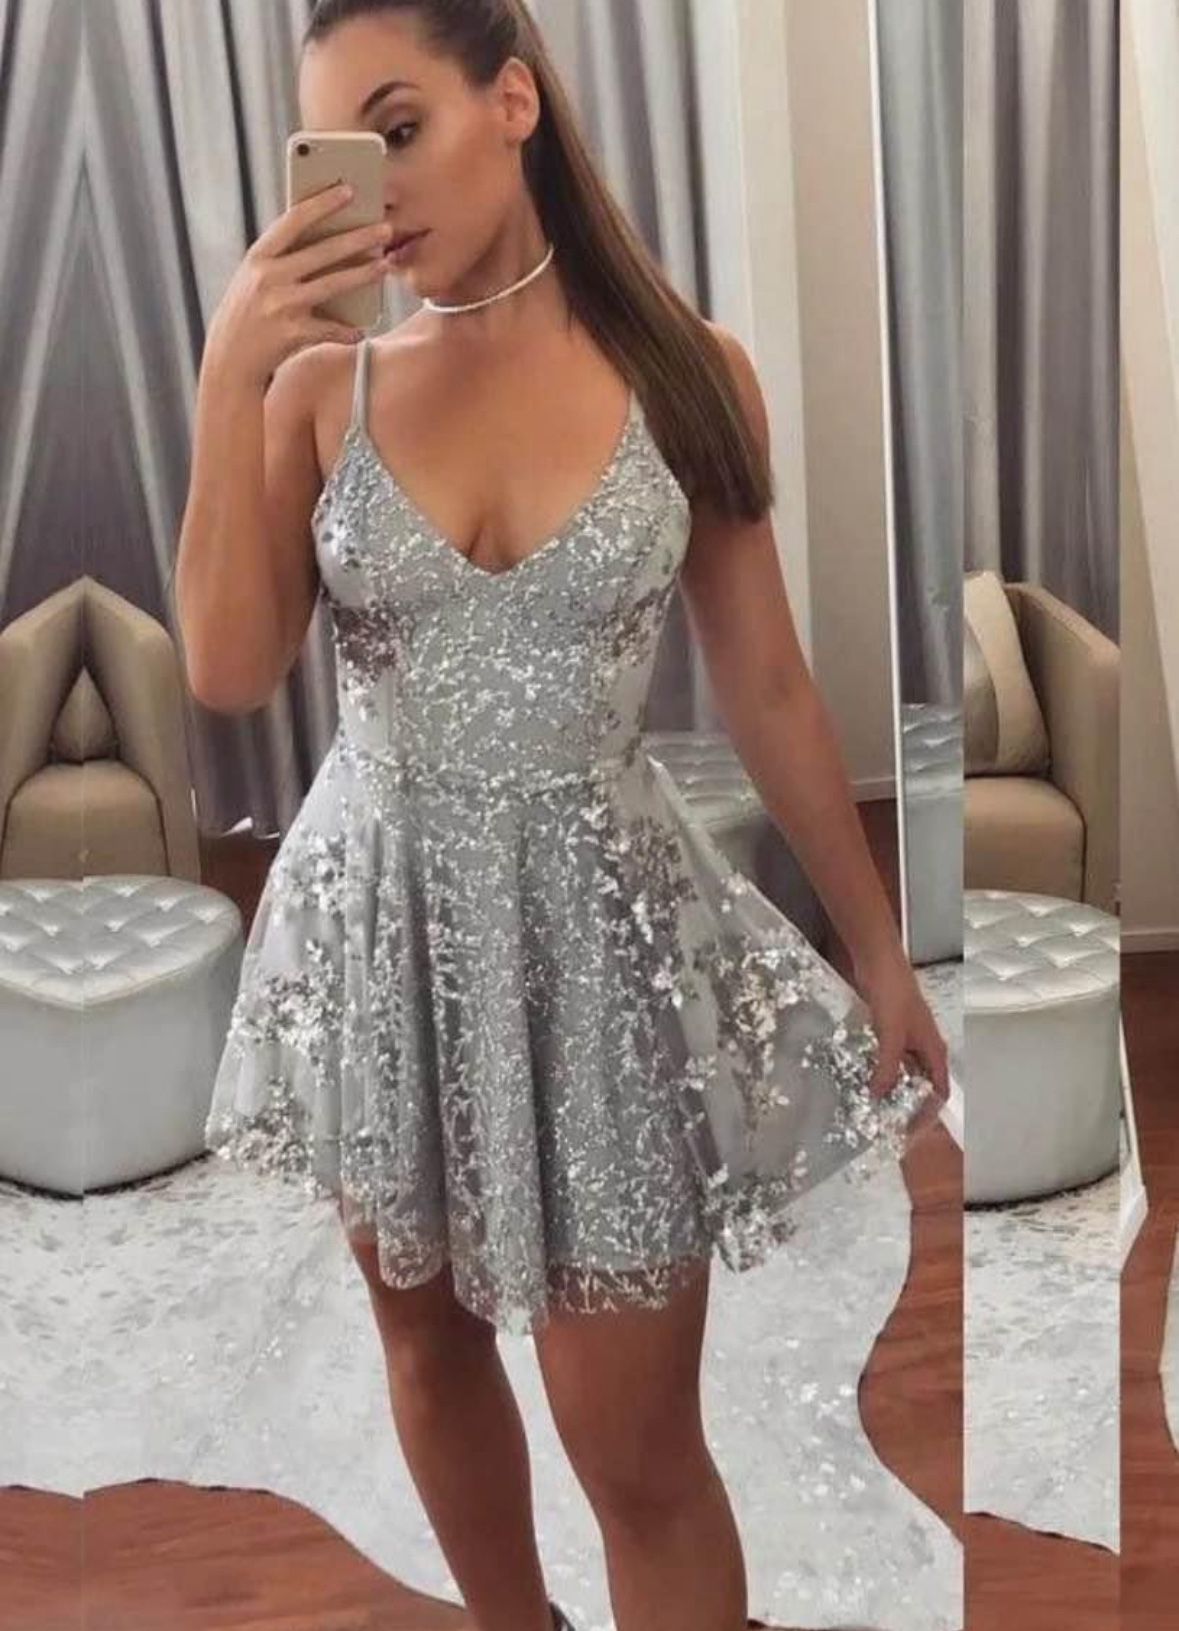 Sparkly Dress